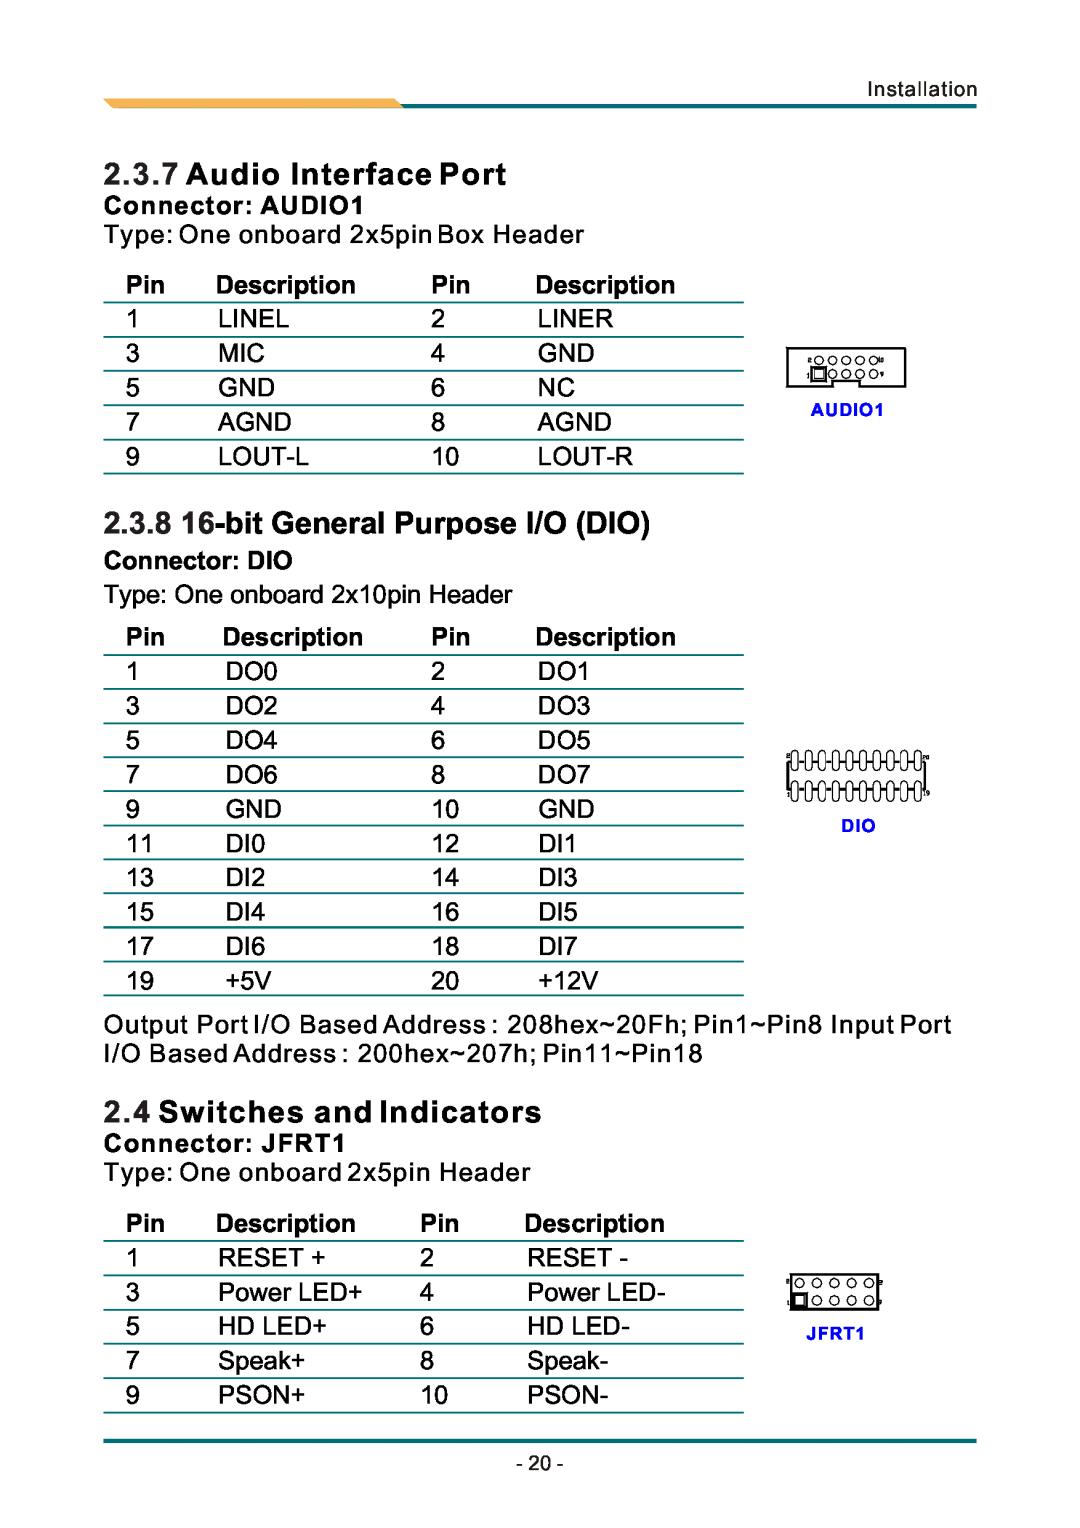 AMD SBX-5363 manual Audio Interface Port, 2.3.8 16-bit General Purpose I/O DIO, Switches and Indicators, AUDIO1, JFRT1 